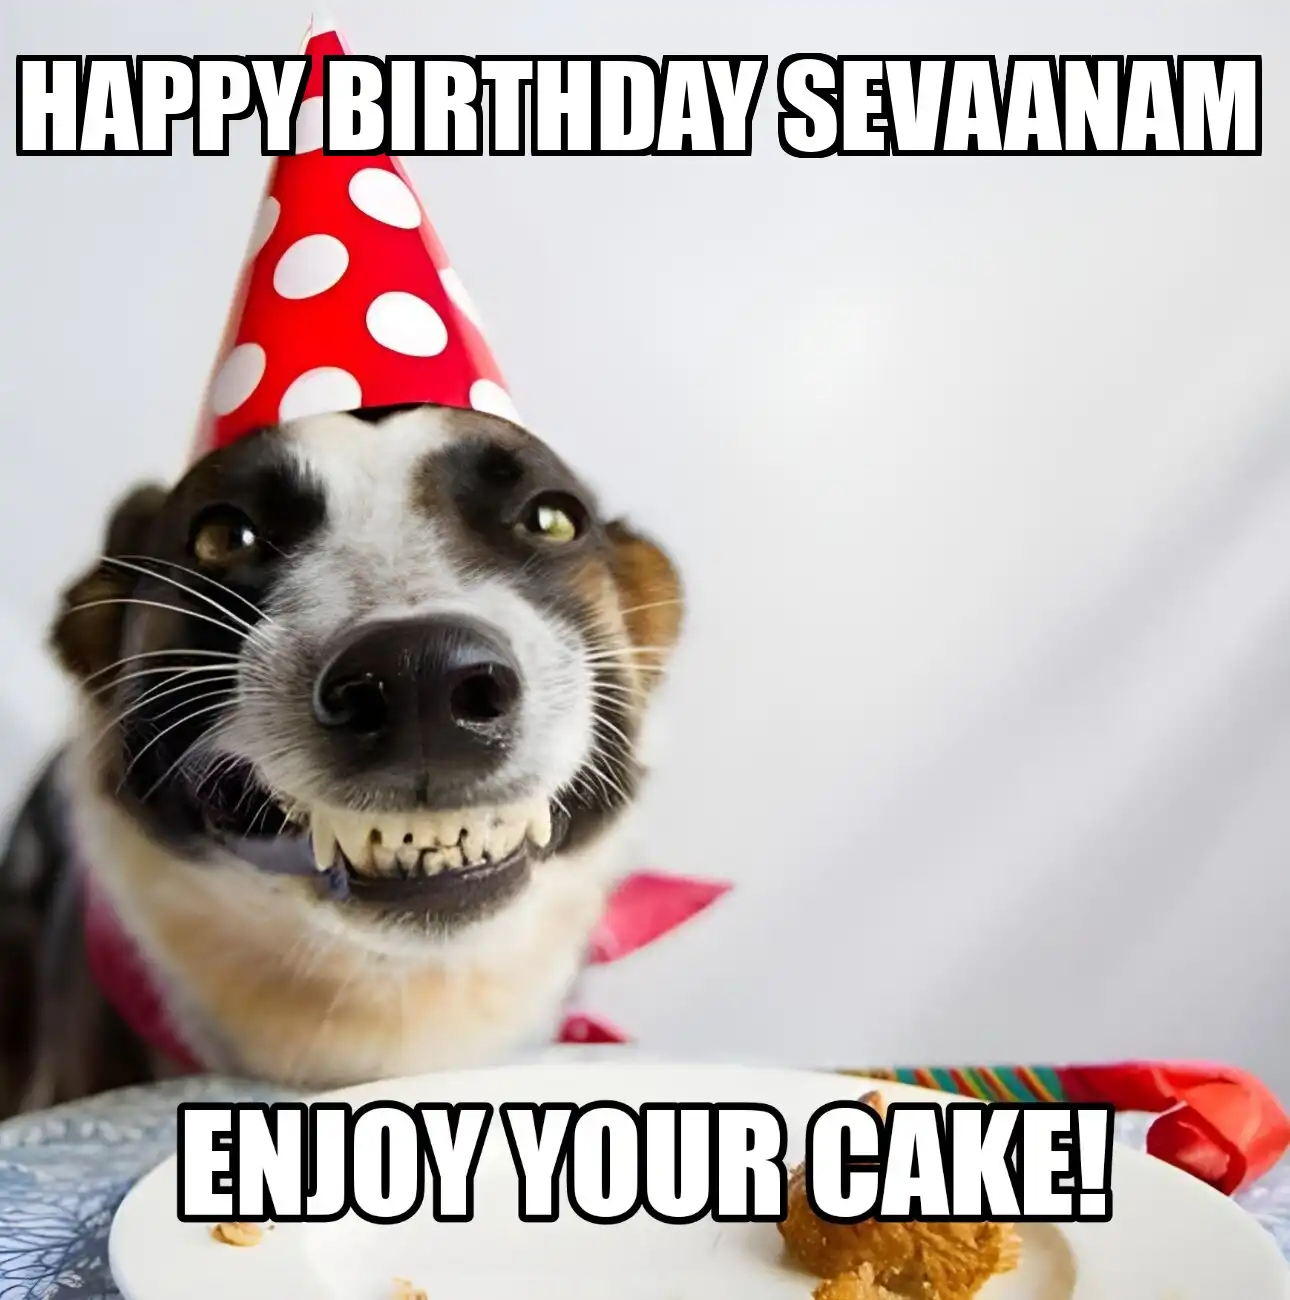 Happy Birthday Sevaanam Enjoy Your Cake Dog Meme